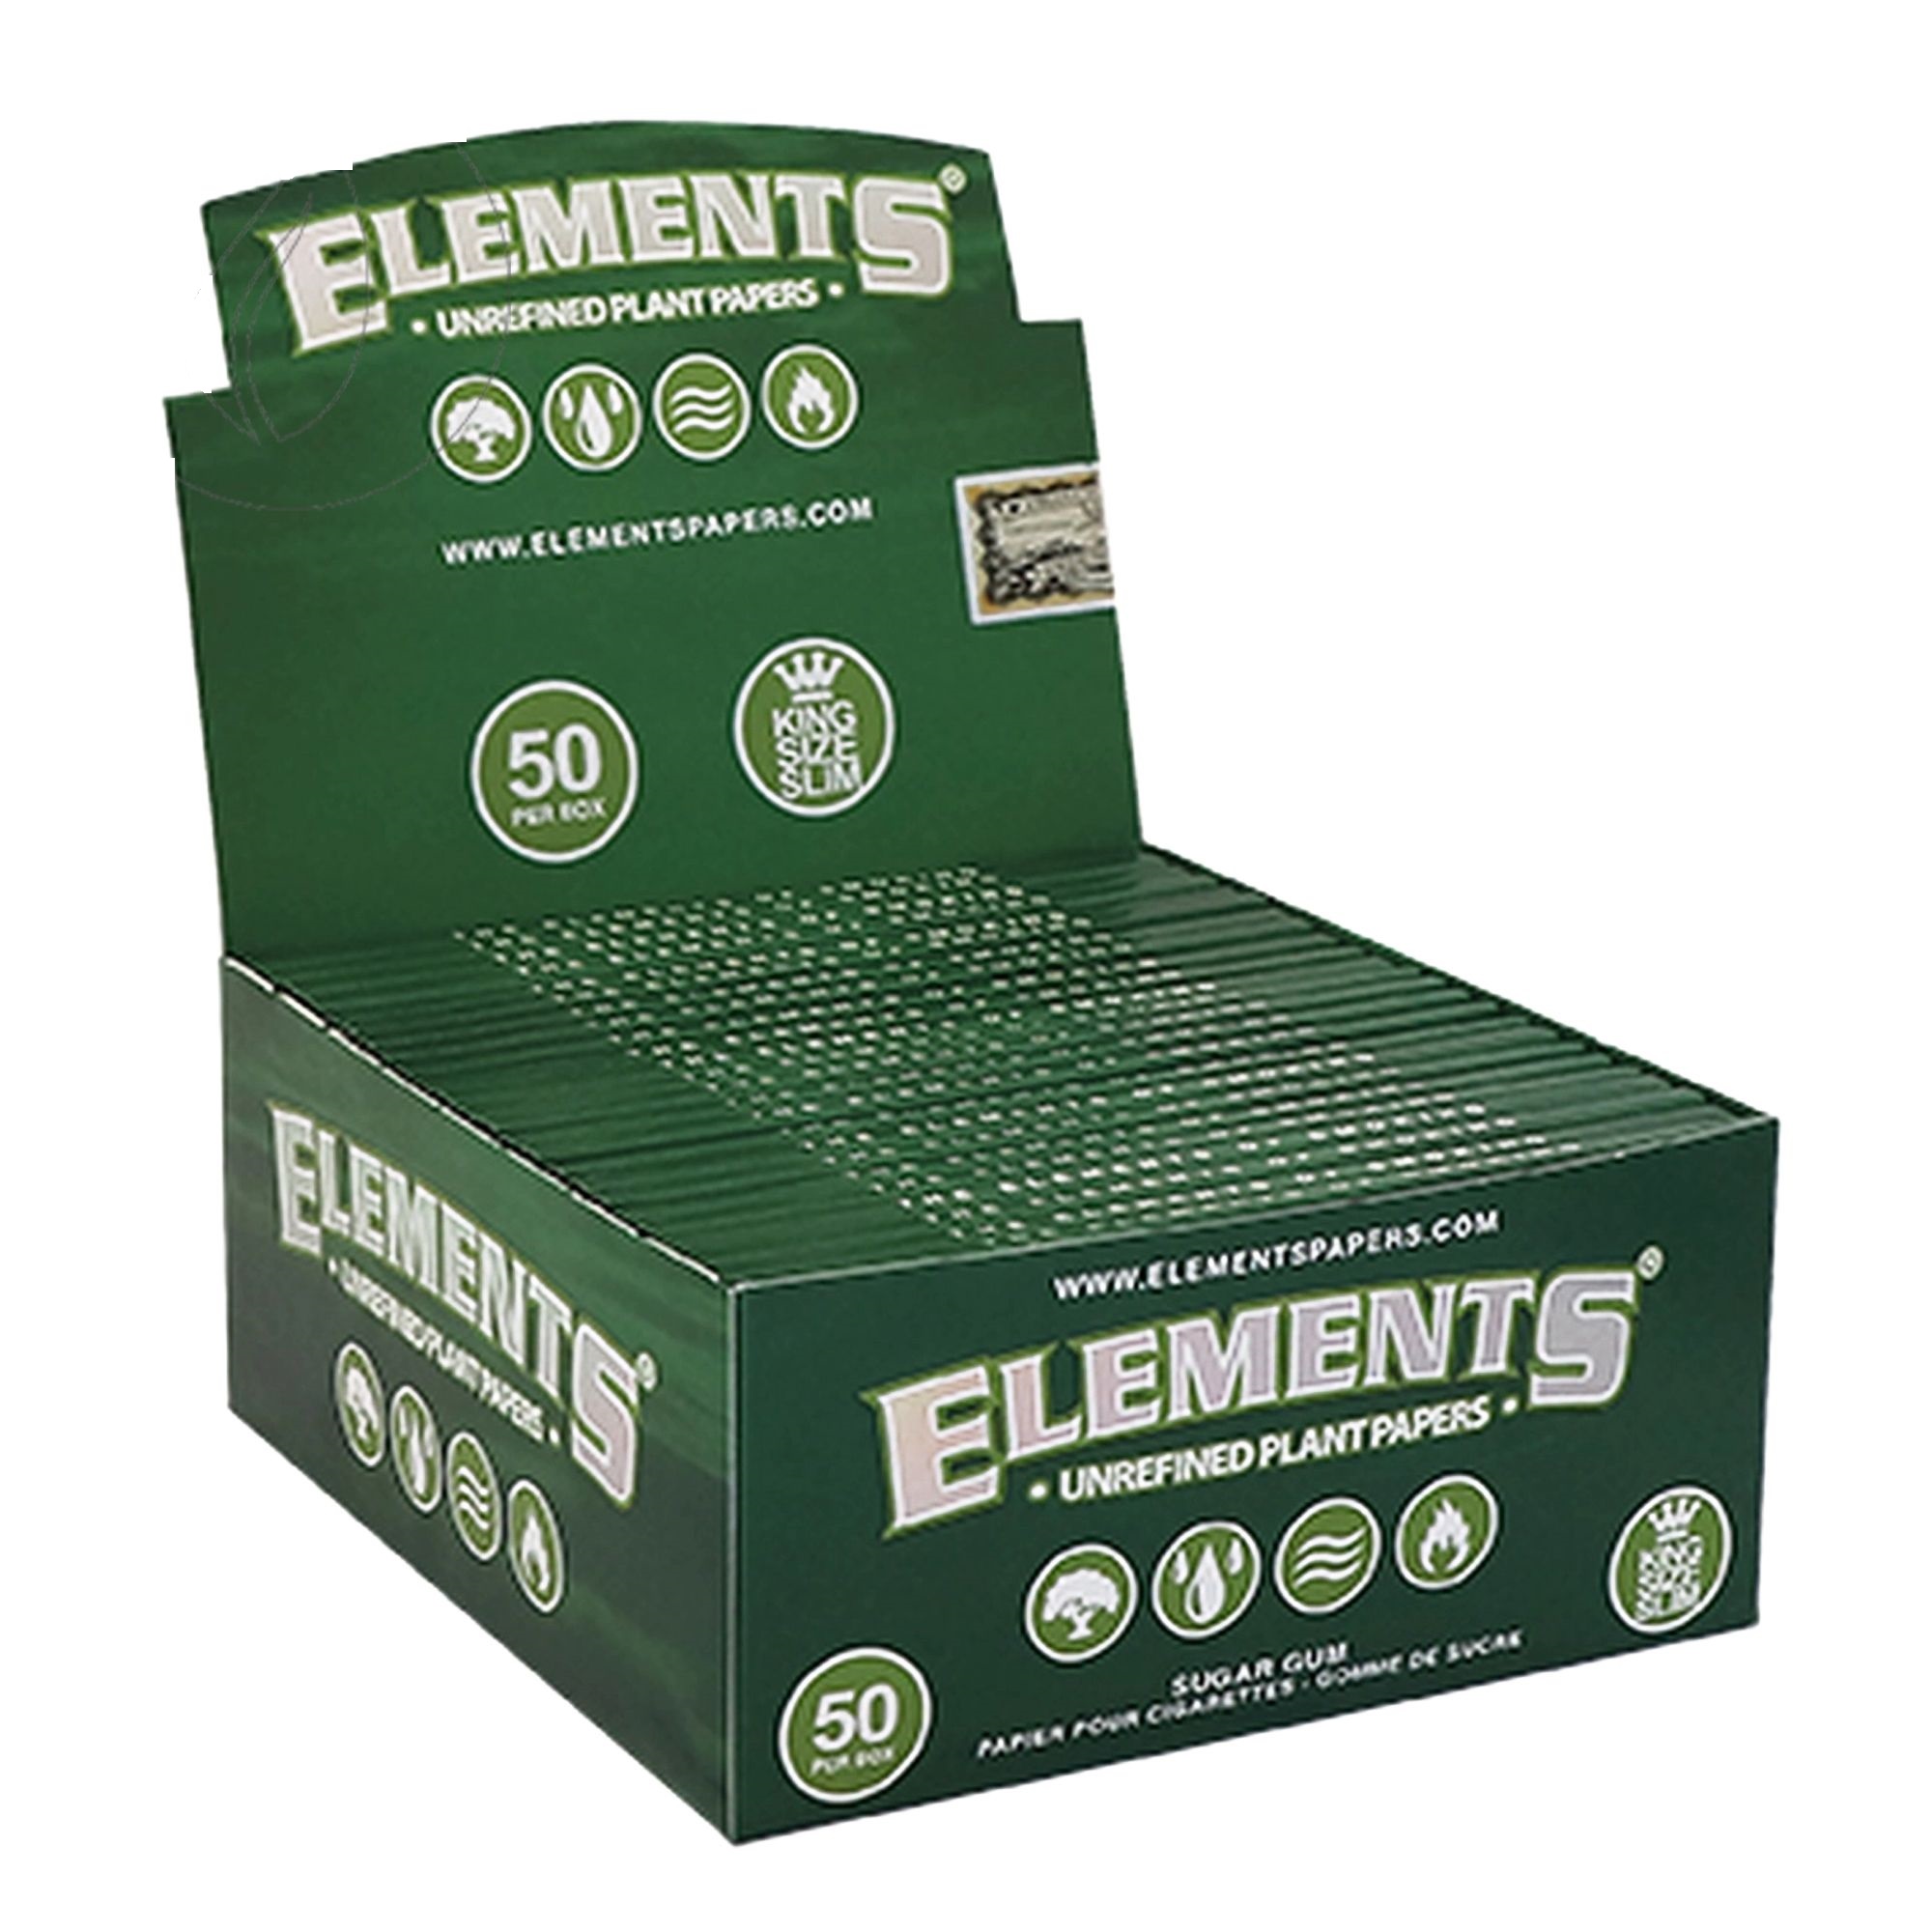 Elements Slim - Unrefined Plant Papers (50x)